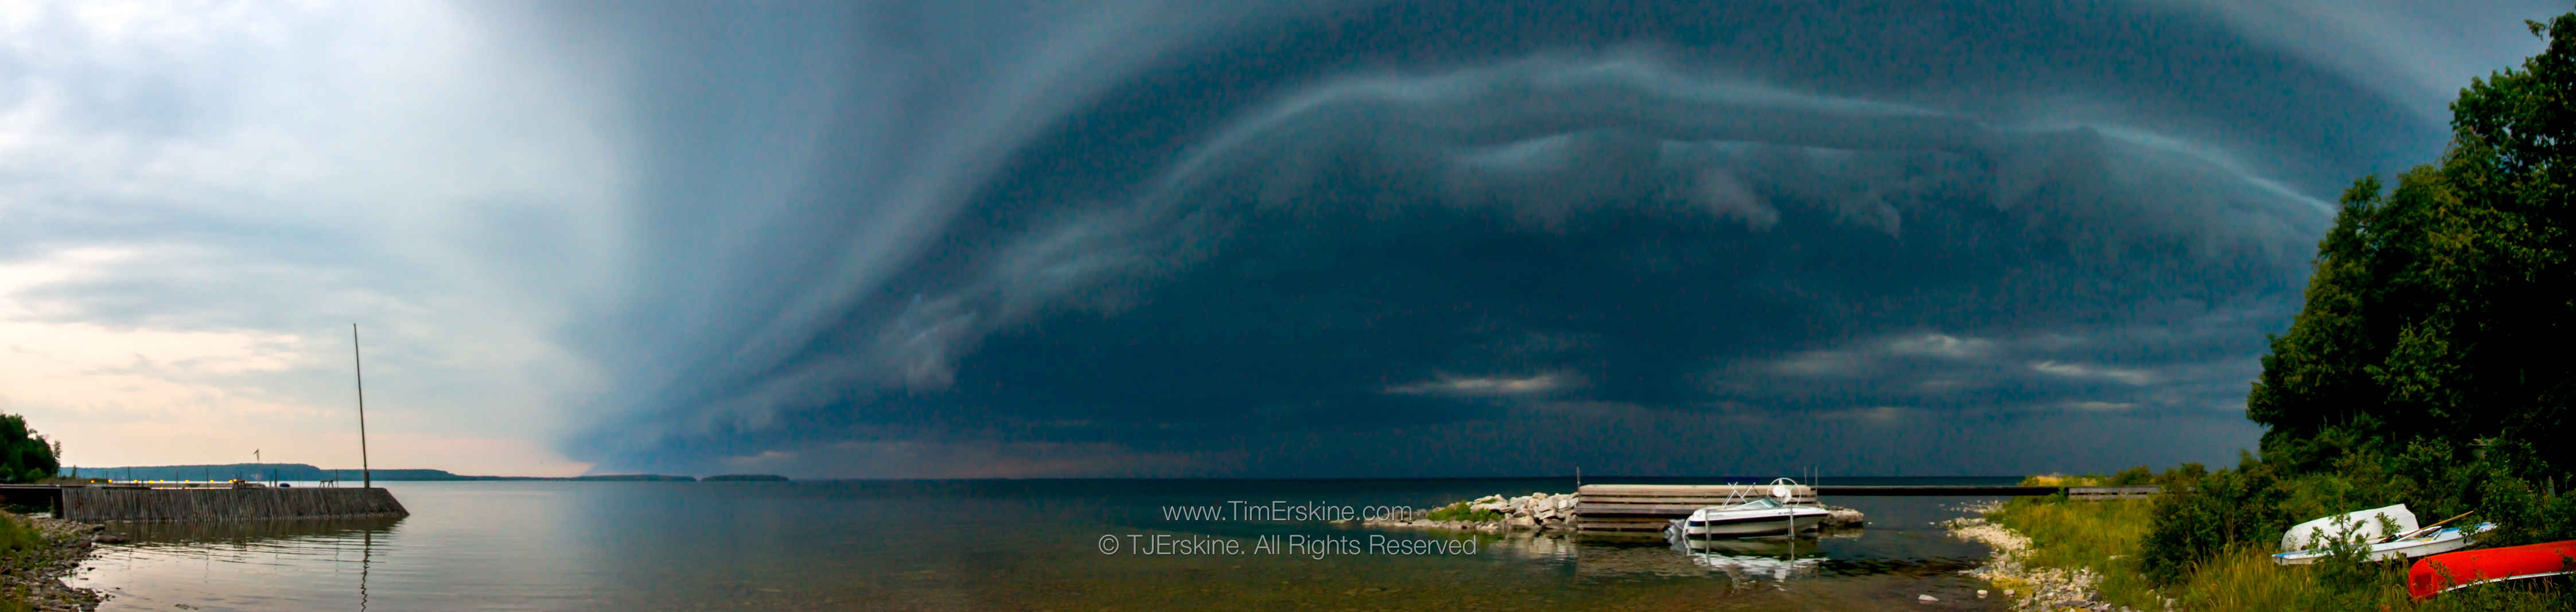 Ephraim Roll Cloud Storm Panorama